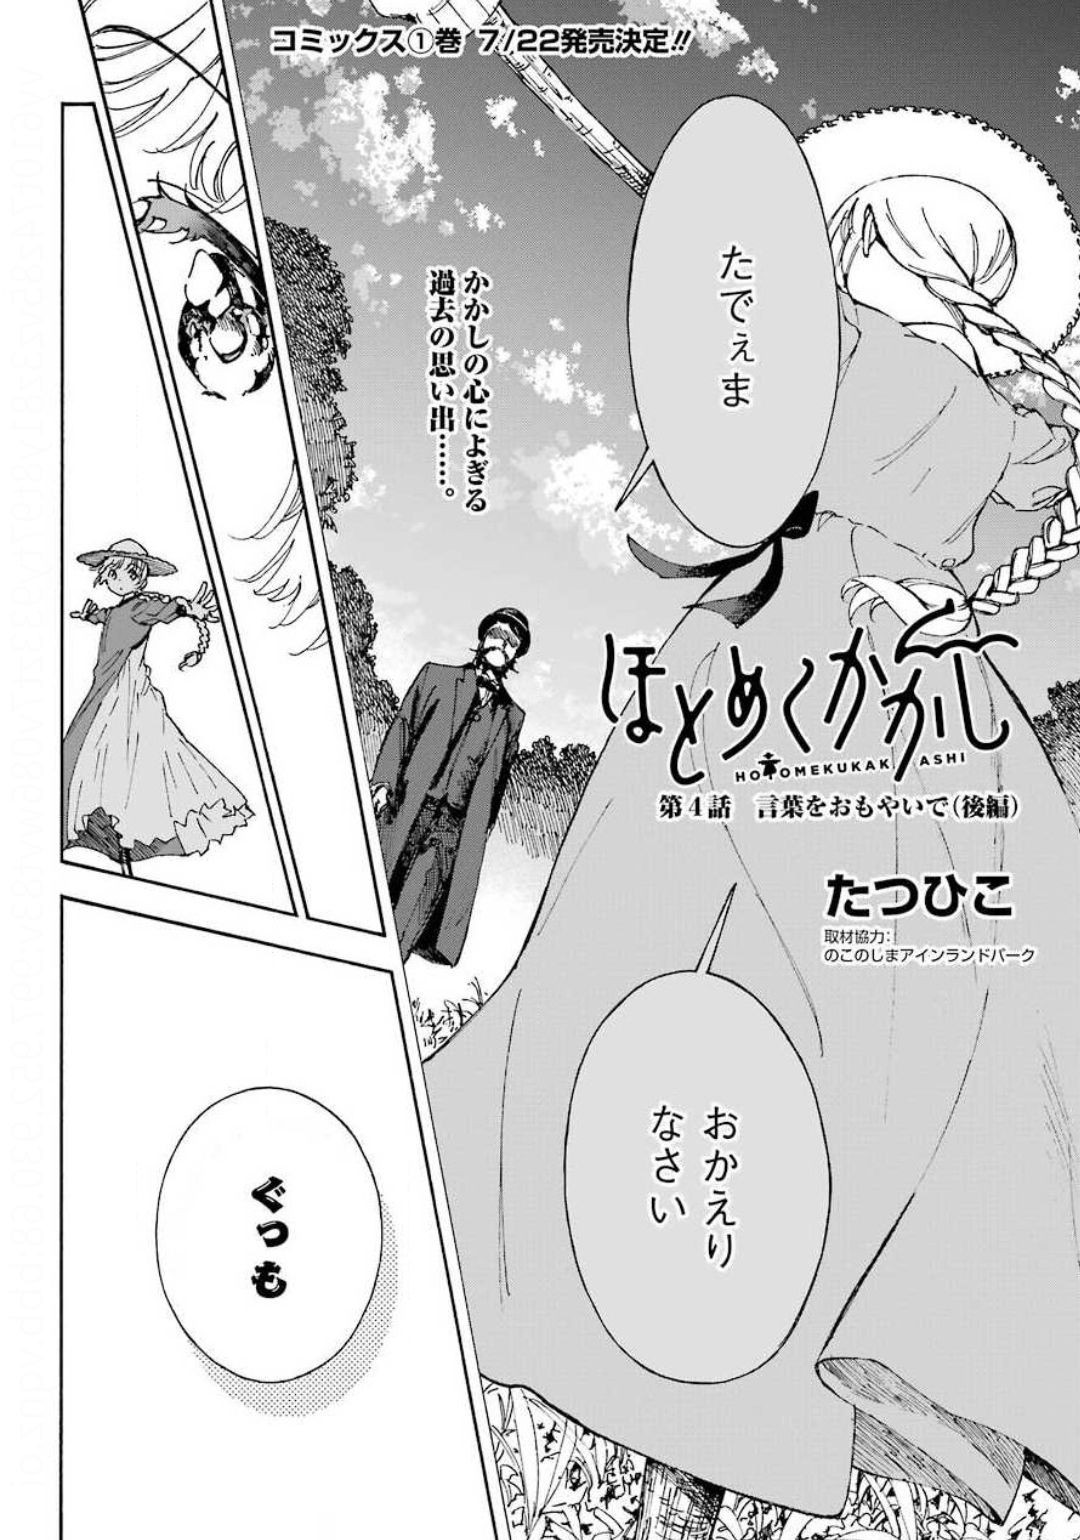 Hotomeku-kakashi - Chapter 04-2 - Page 1